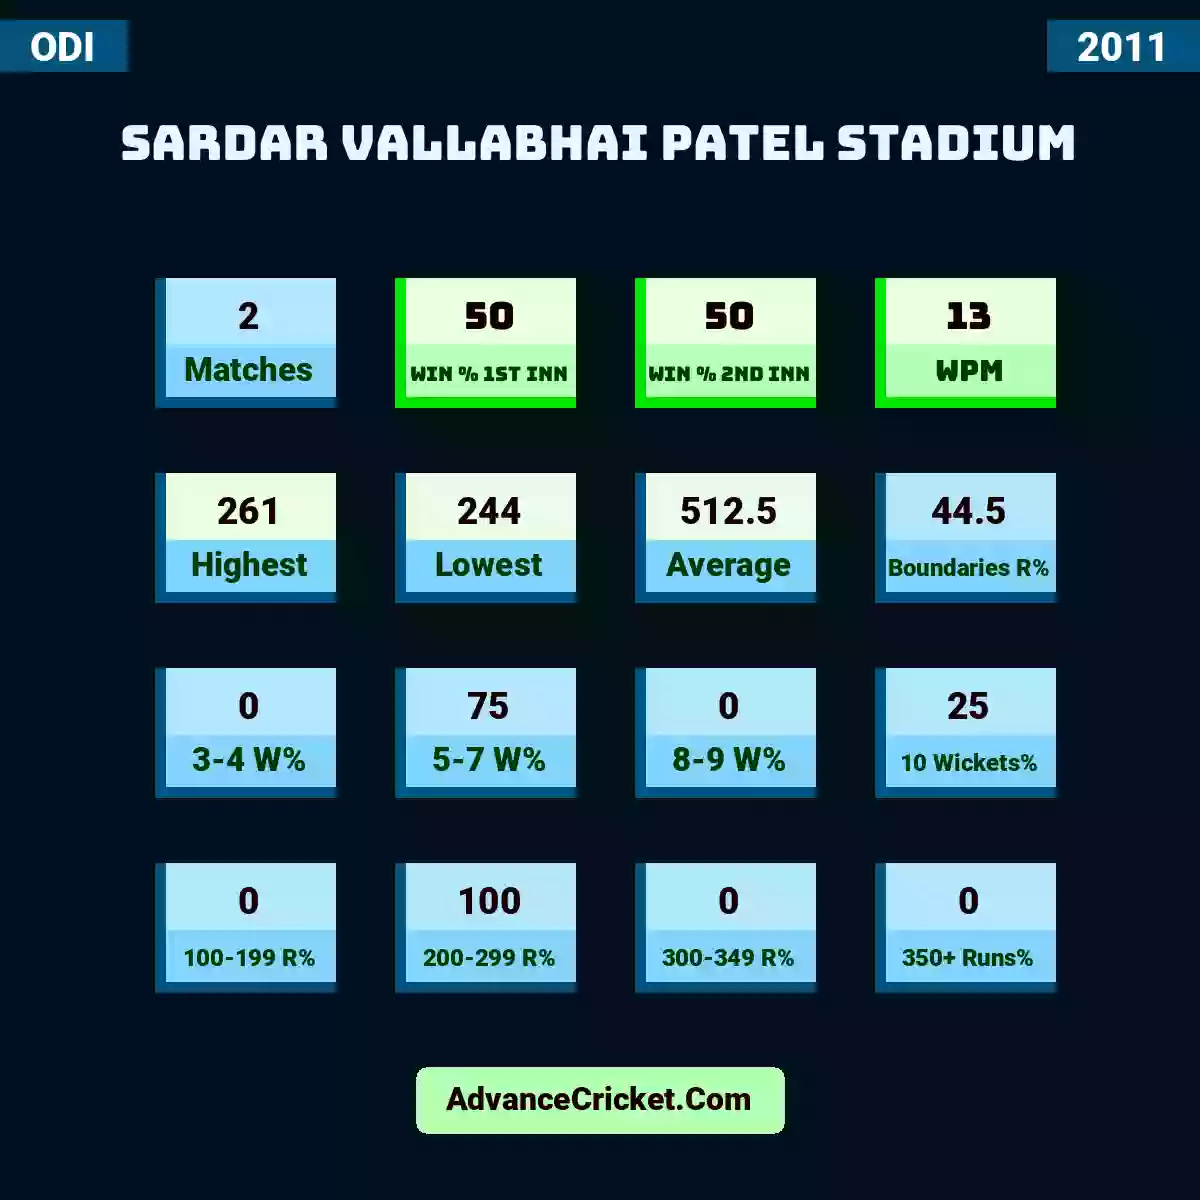 Image showing Sardar Vallabhai Patel Stadium with Matches: 2, Win % 1st Inn: 50, Win % 2nd Inn: 50, WPM: 13, Highest: 261, Lowest: 244, Average: 512.5, Boundaries R%: 44.5, 3-4 W%: 0, 5-7 W%: 75, 8-9 W%: 0, 10 Wickets%: 25, 100-199 R%: 0, 200-299 R%: 100, 300-349 R%: 0, 350+ Runs%: 0.